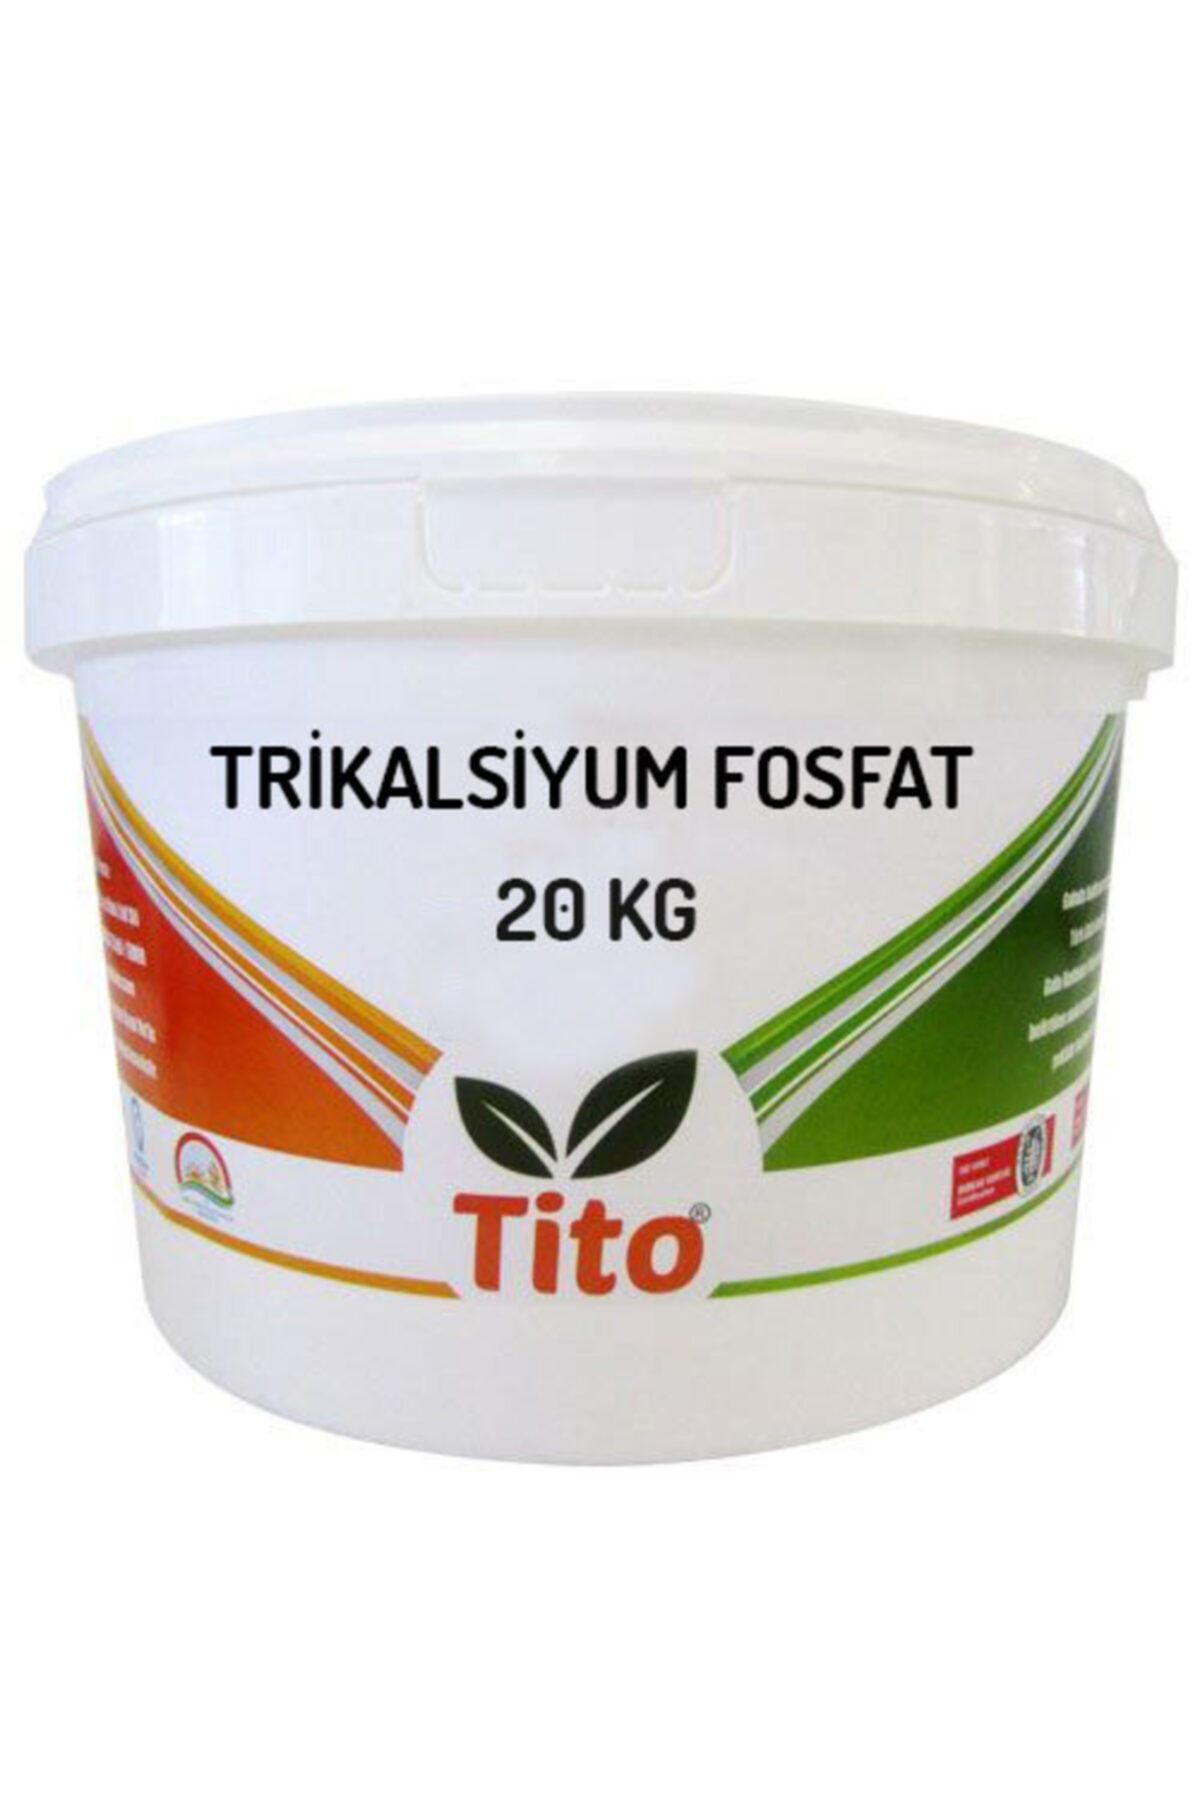 tito Trikalsiyum Fosfat E341 20 Kg